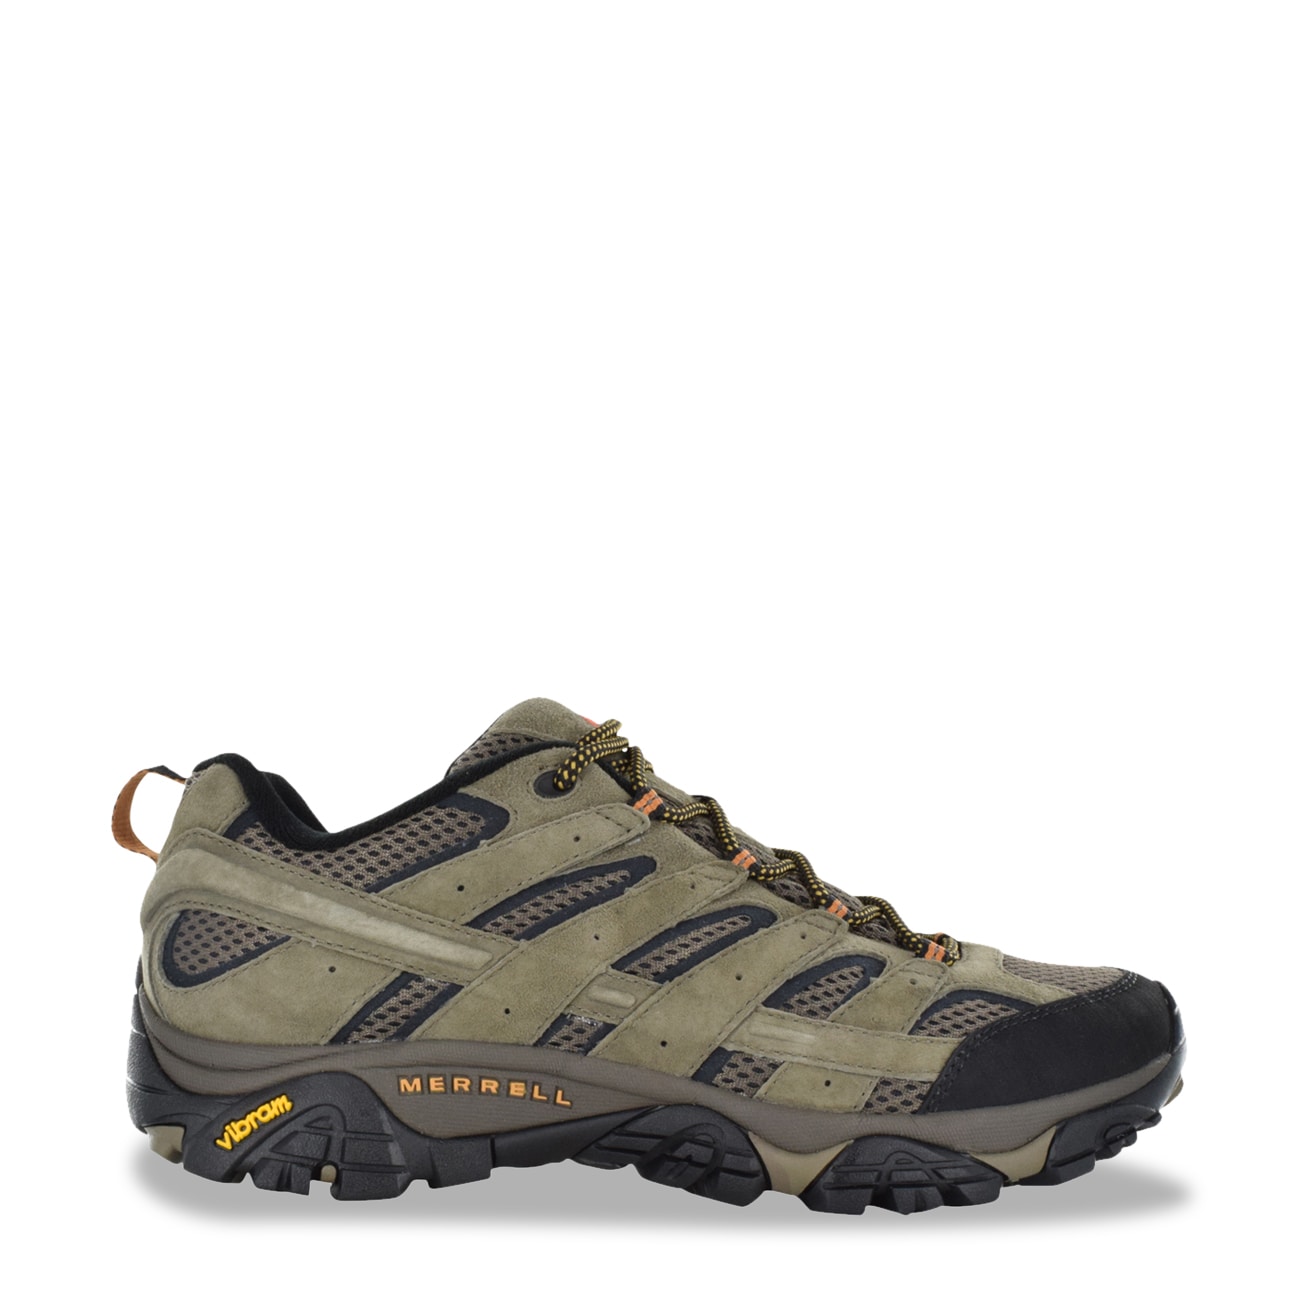 Merrell Men's MOAB 2 Ventilator Hiker - Wide Width | The Shoe Company